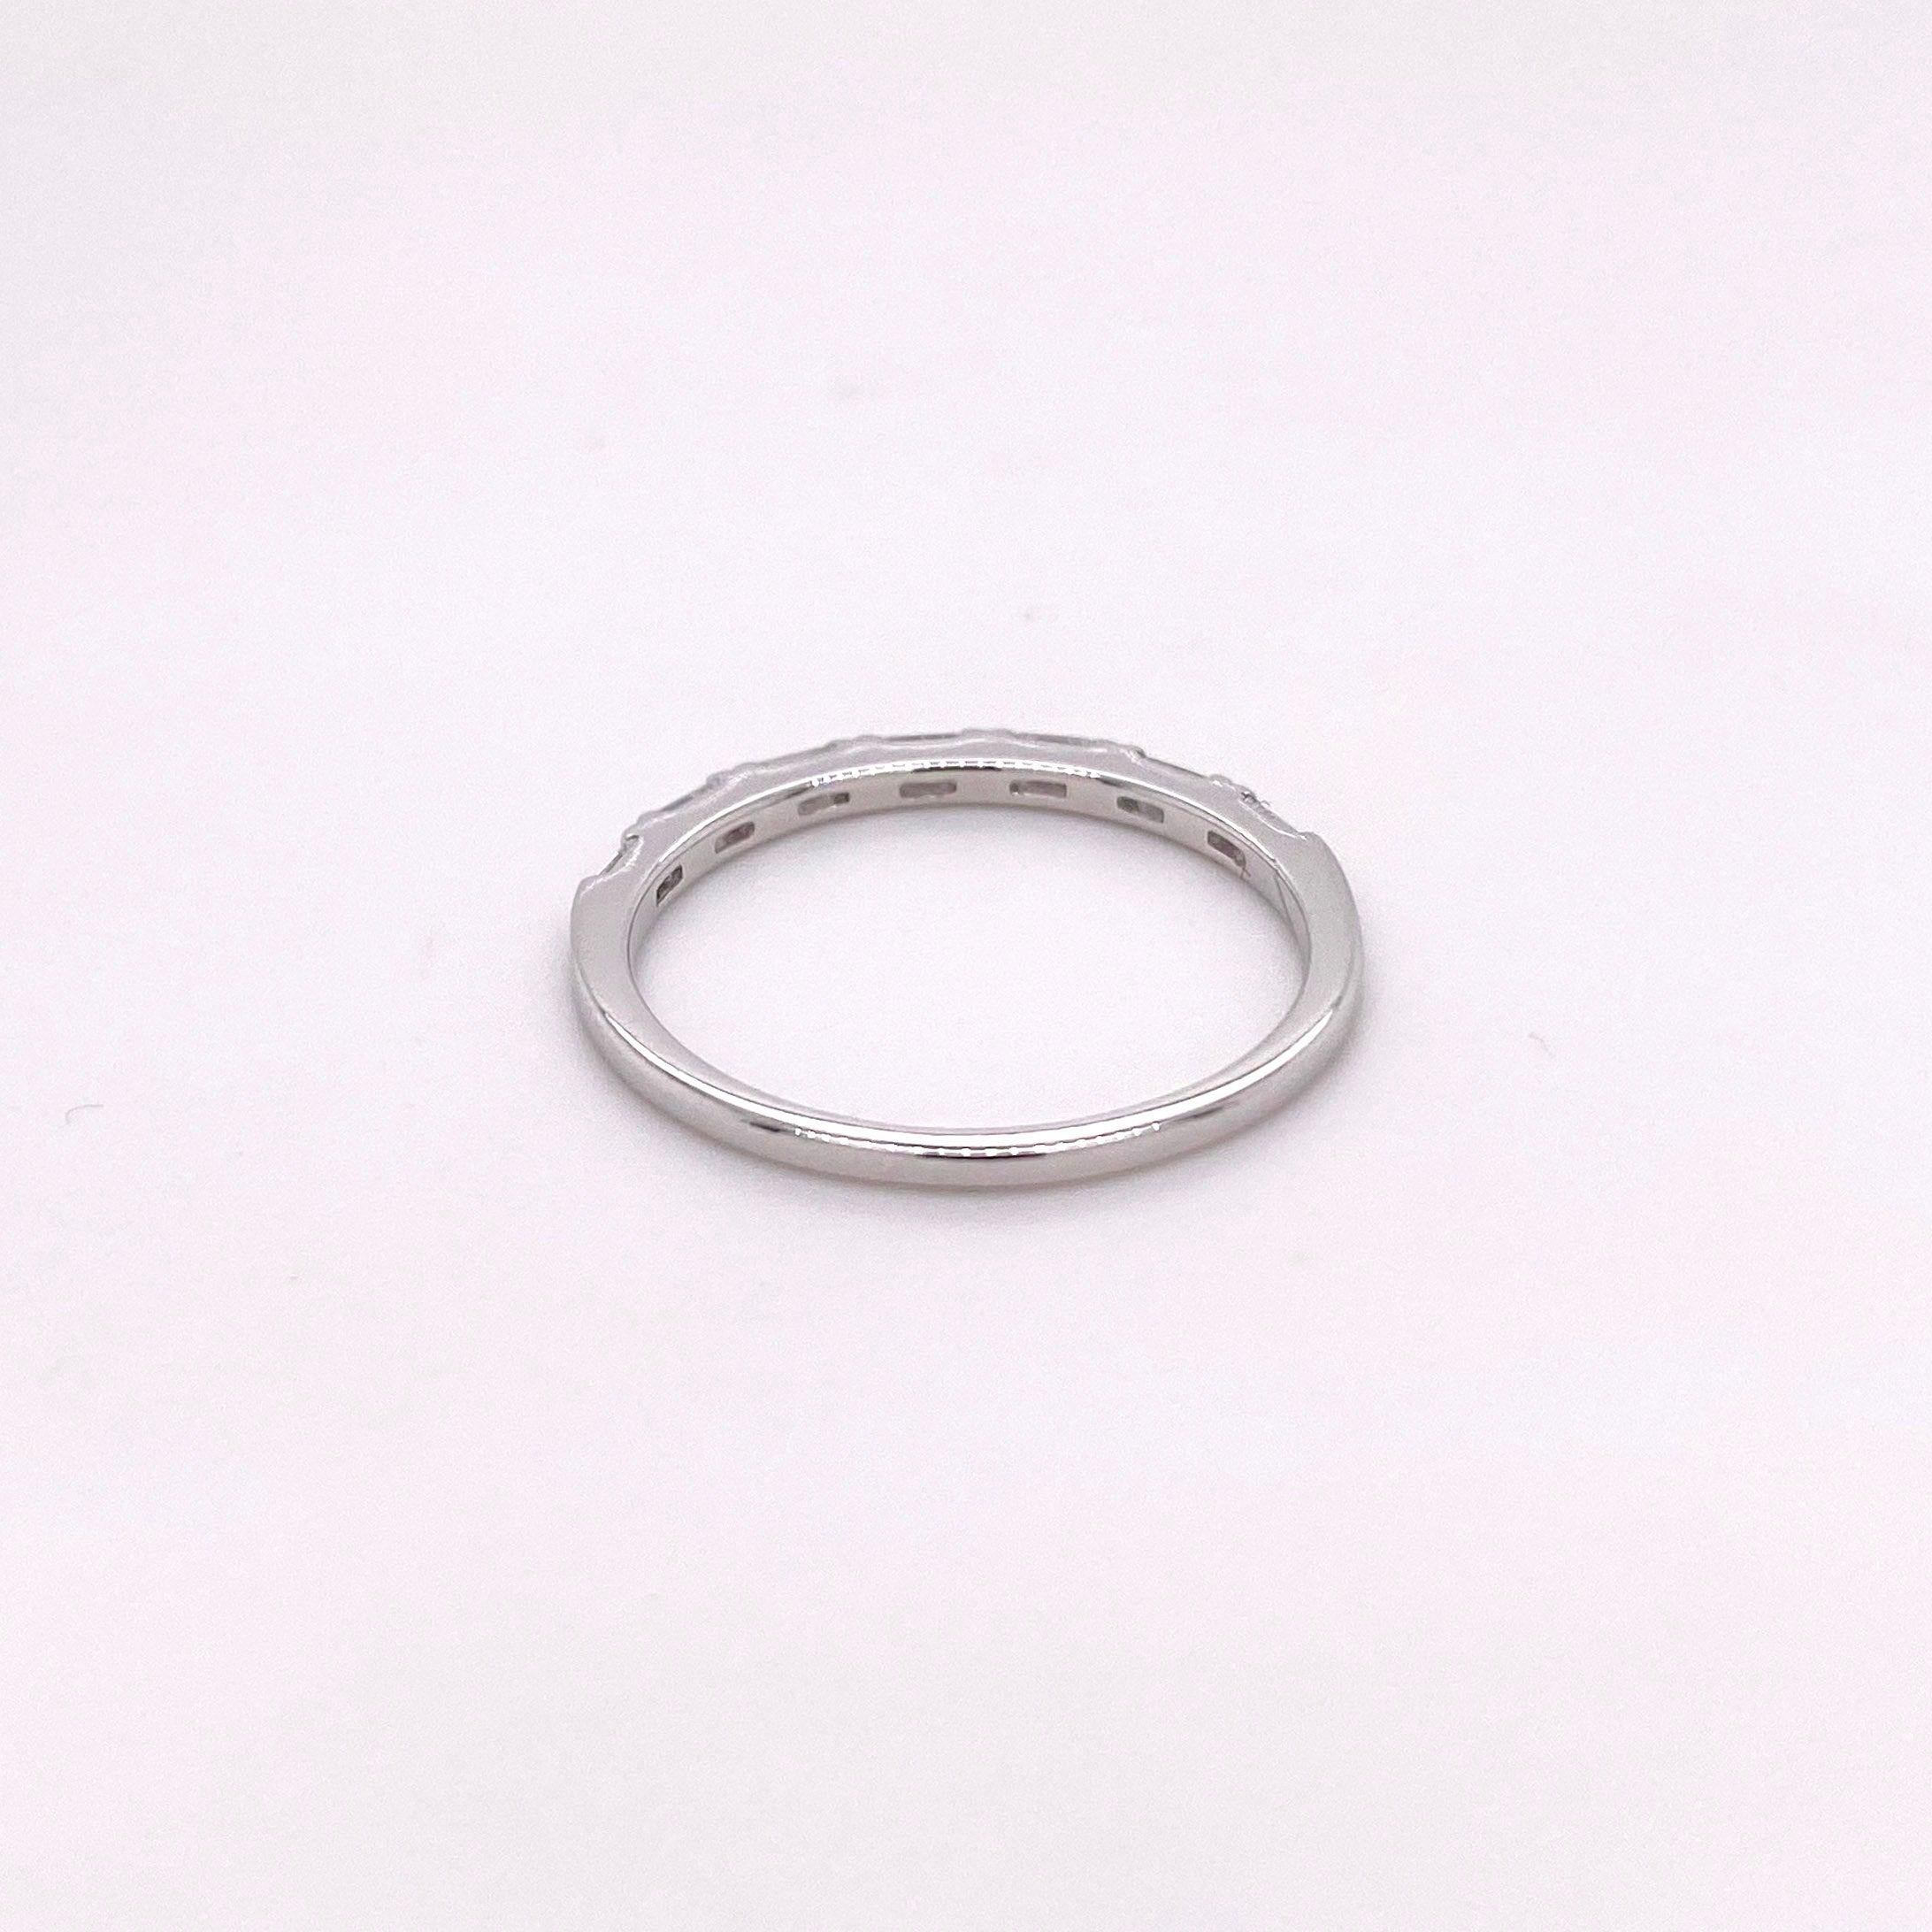 For Sale:  1/4 Carat Diamond Baguette Ring Band 14 Karat White Gold Wedding Stackable Band 4